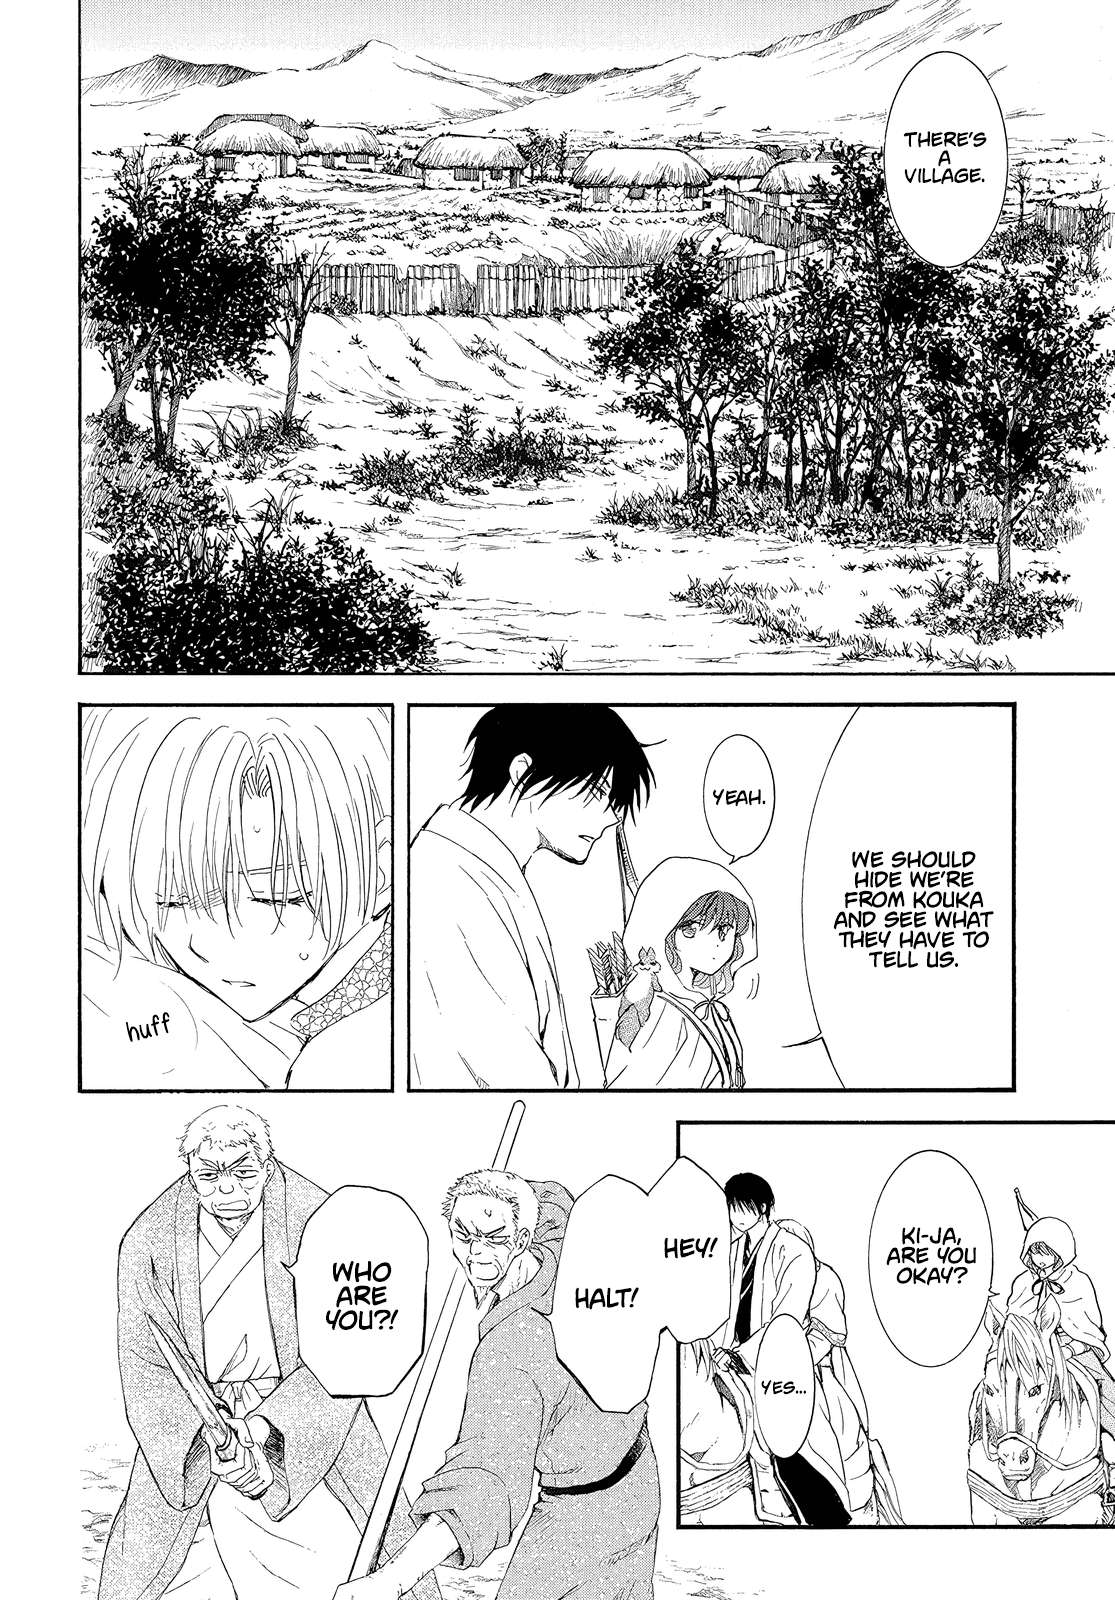 Akatsuki no Yona chapter 245 page 11